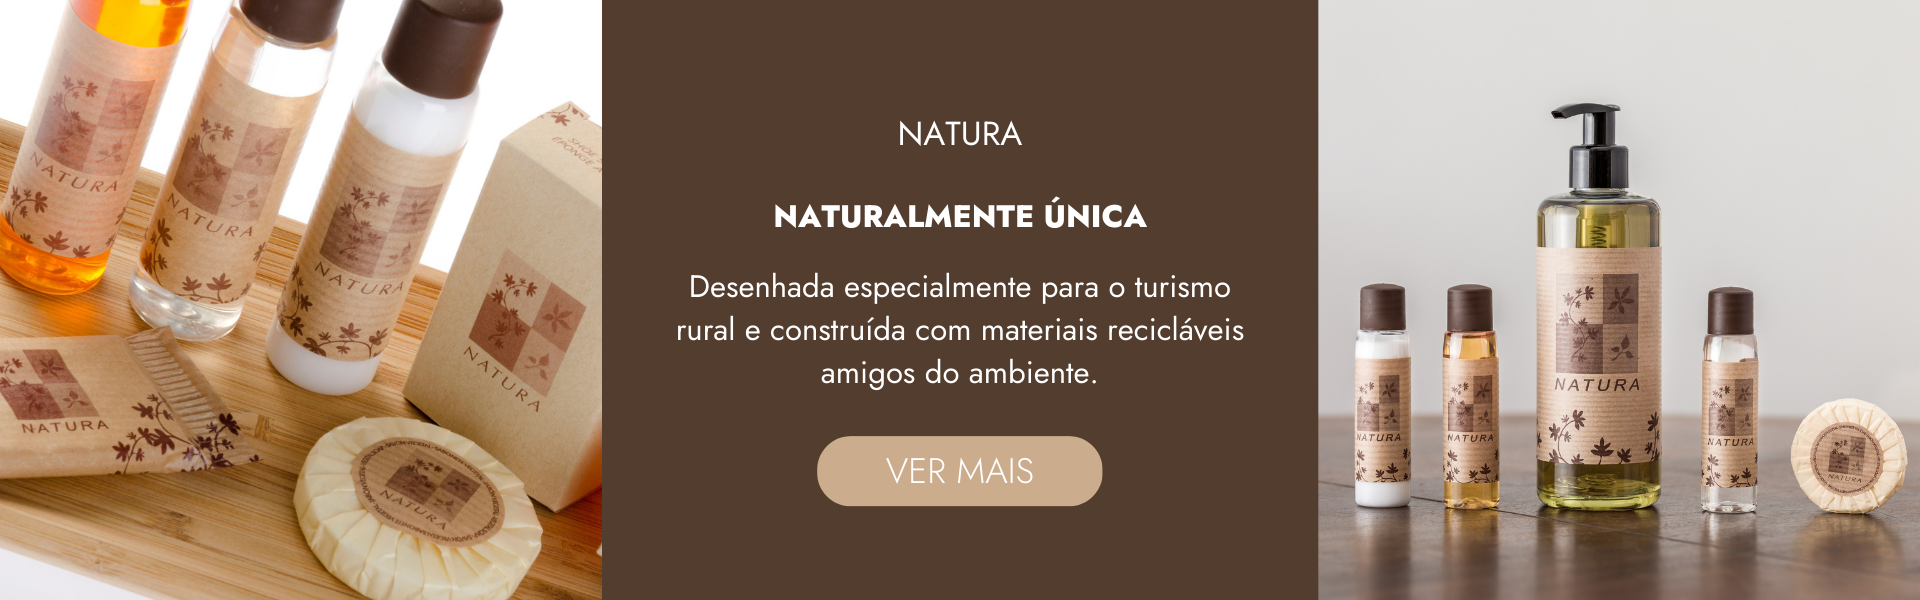 natura-setembro-desktop